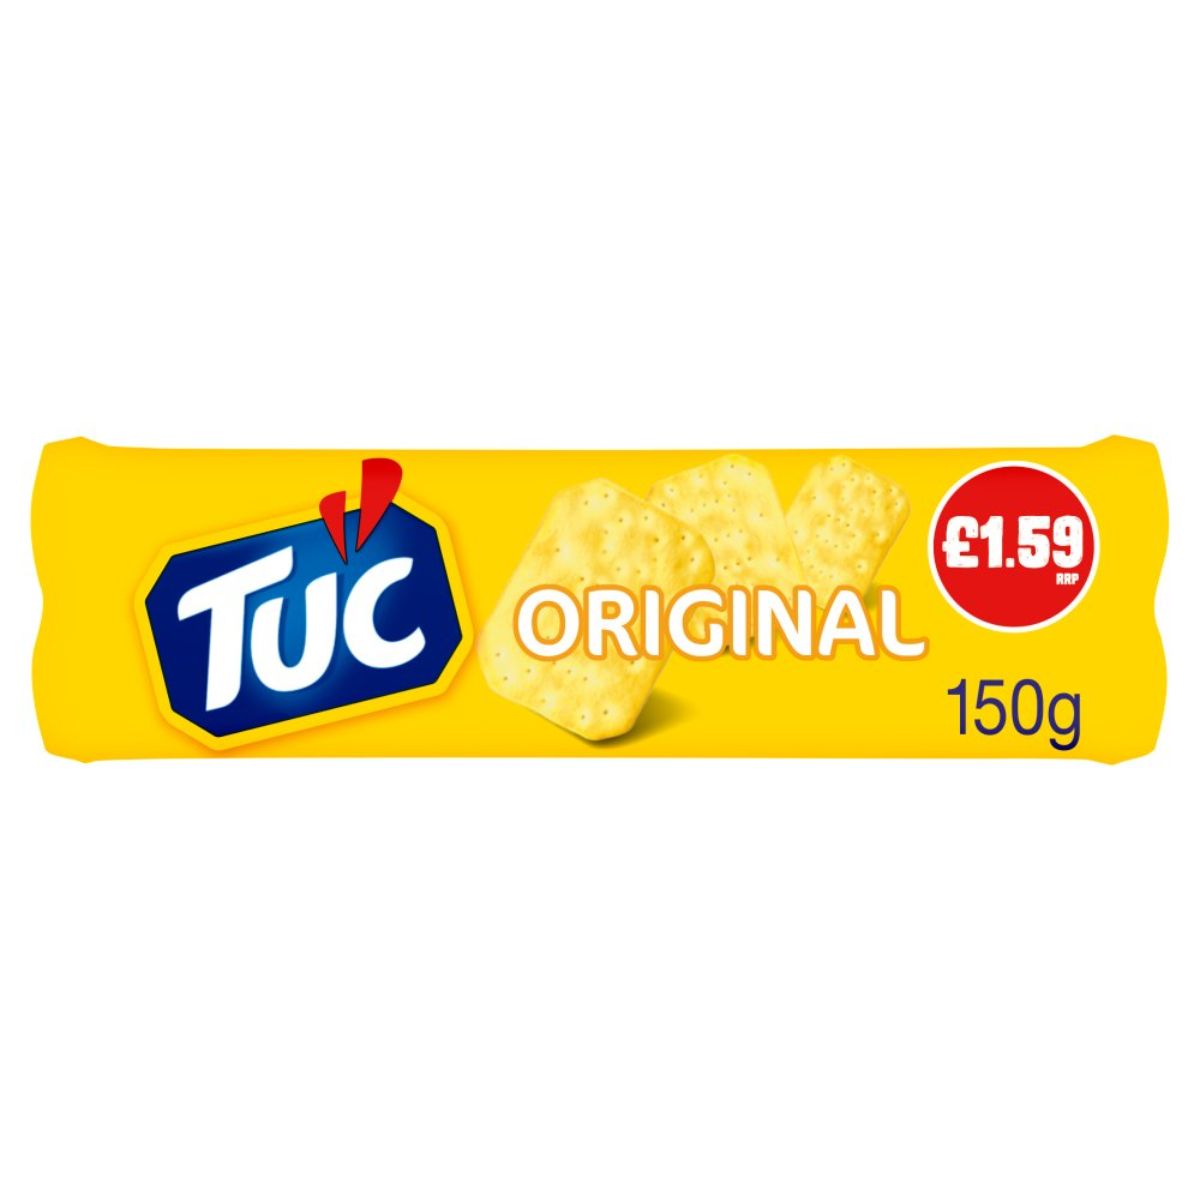 Jacobs - TUC Original Snack Crackers - 150g.